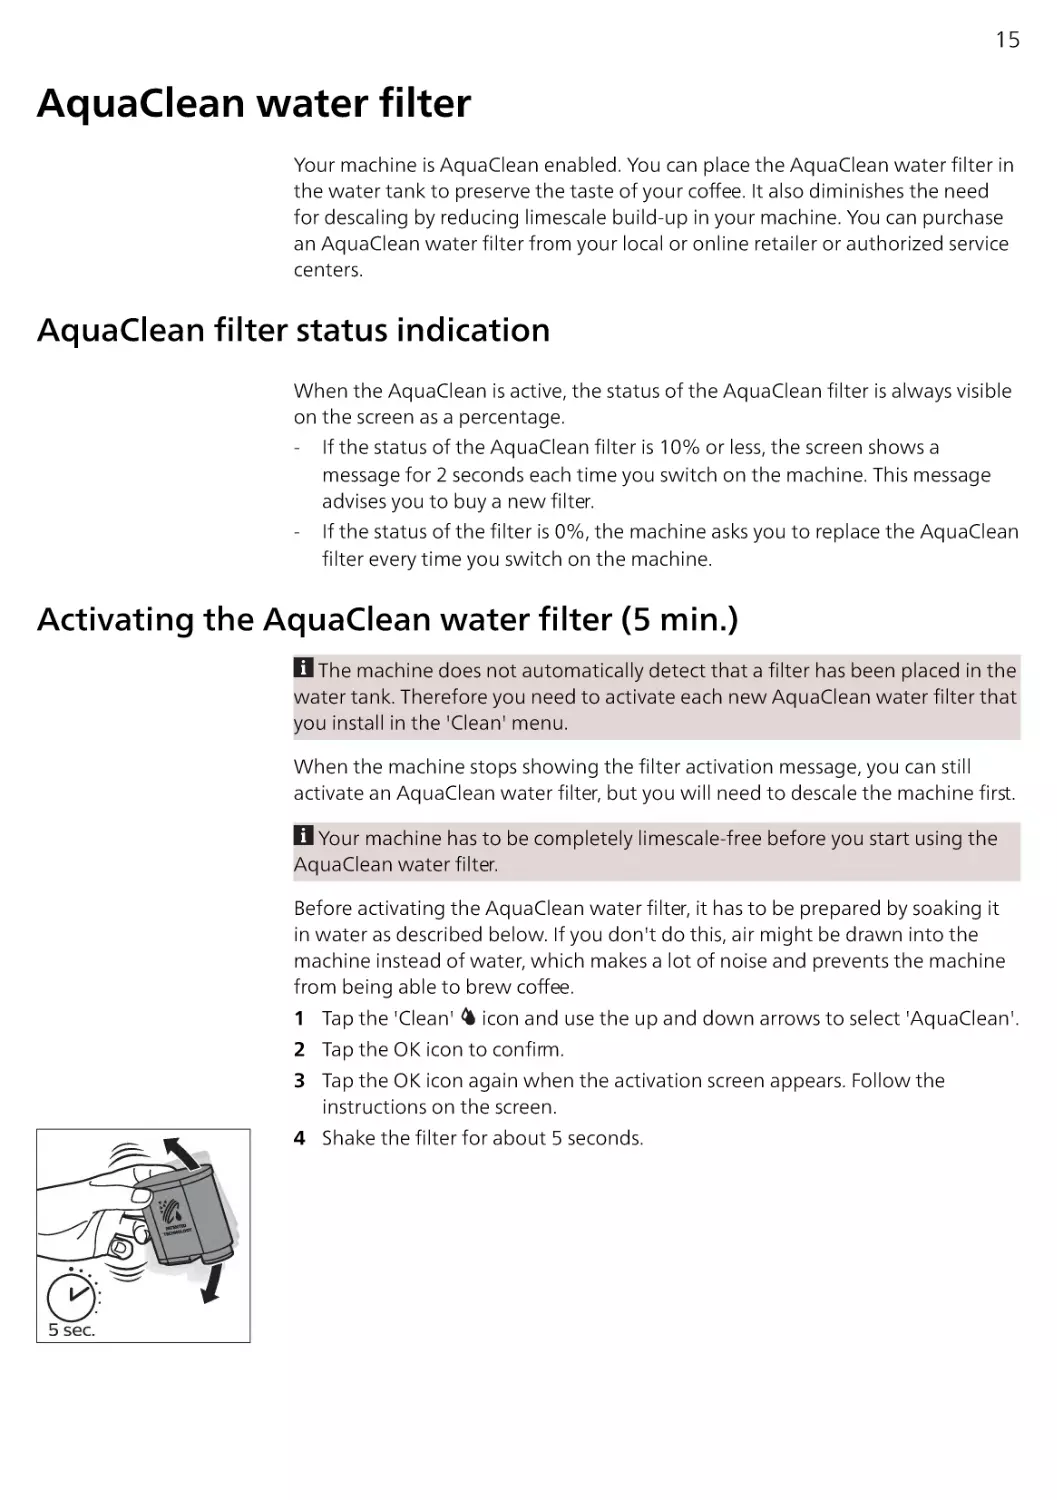 AquaClean water filter
AquaClean filter status indication
Activating the AquaClean water filter (5 min.)